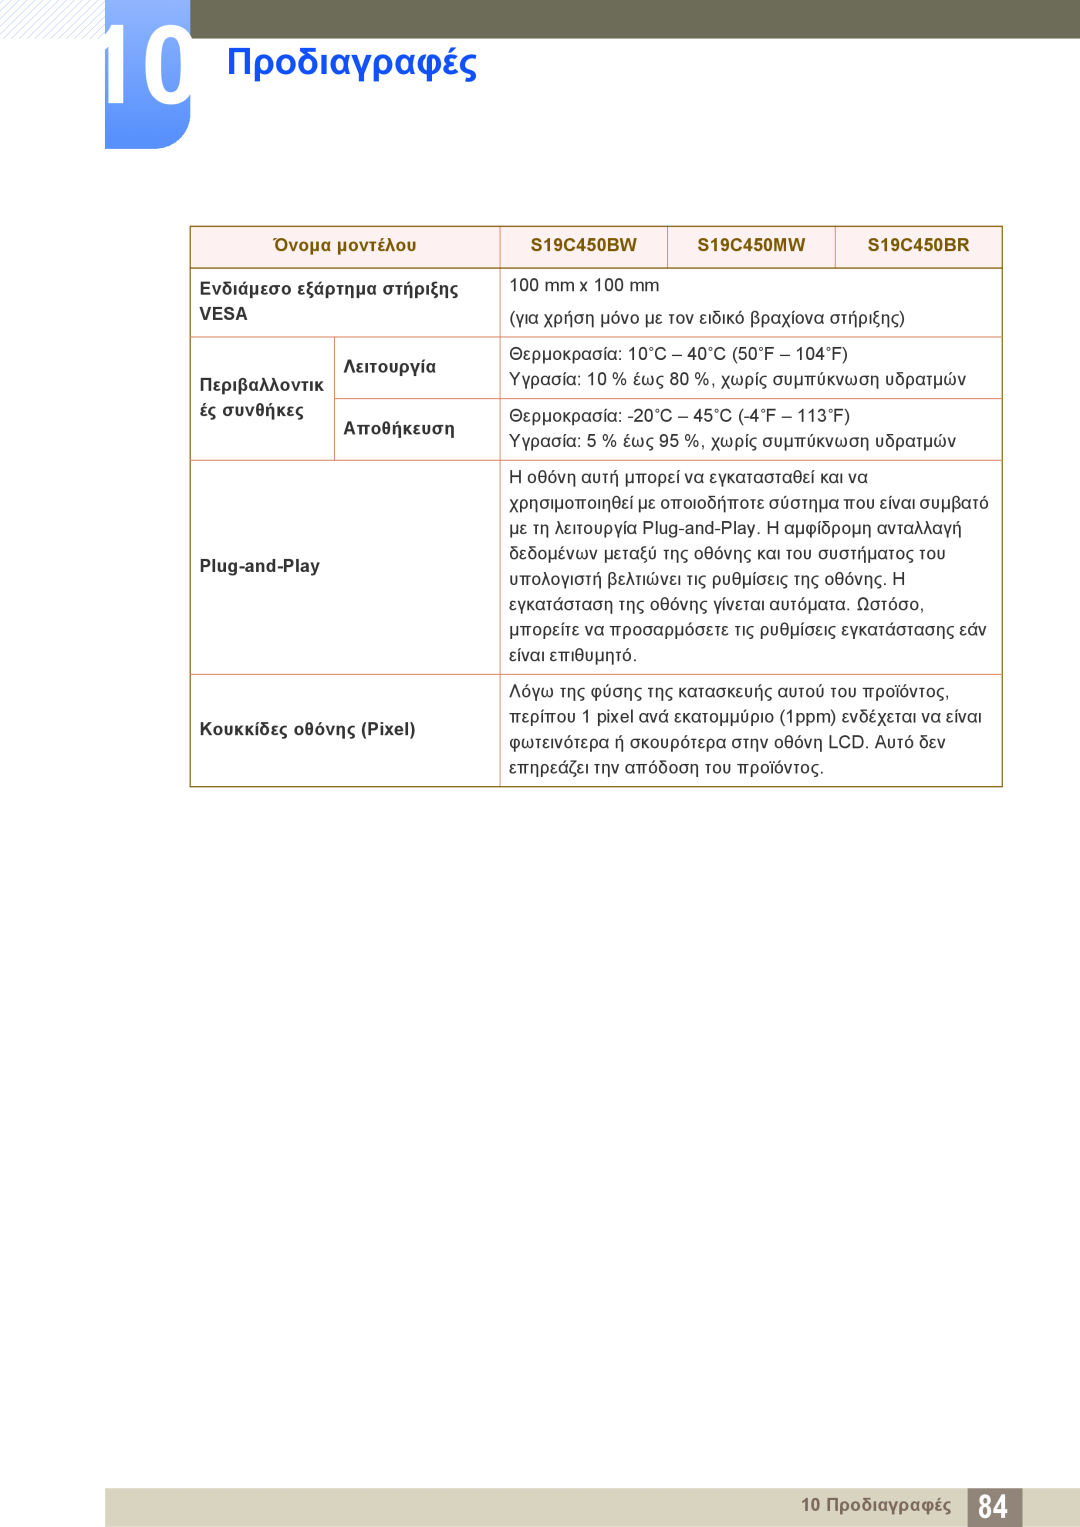 Samsung LS19C45KBW/EN manual 10 Προδιαγραφές, Ενδιάμεσο εξάρτημα στήριξης, Vesa, Λειτουργία, Περιβαλλοντικ, ές συνθήκες 